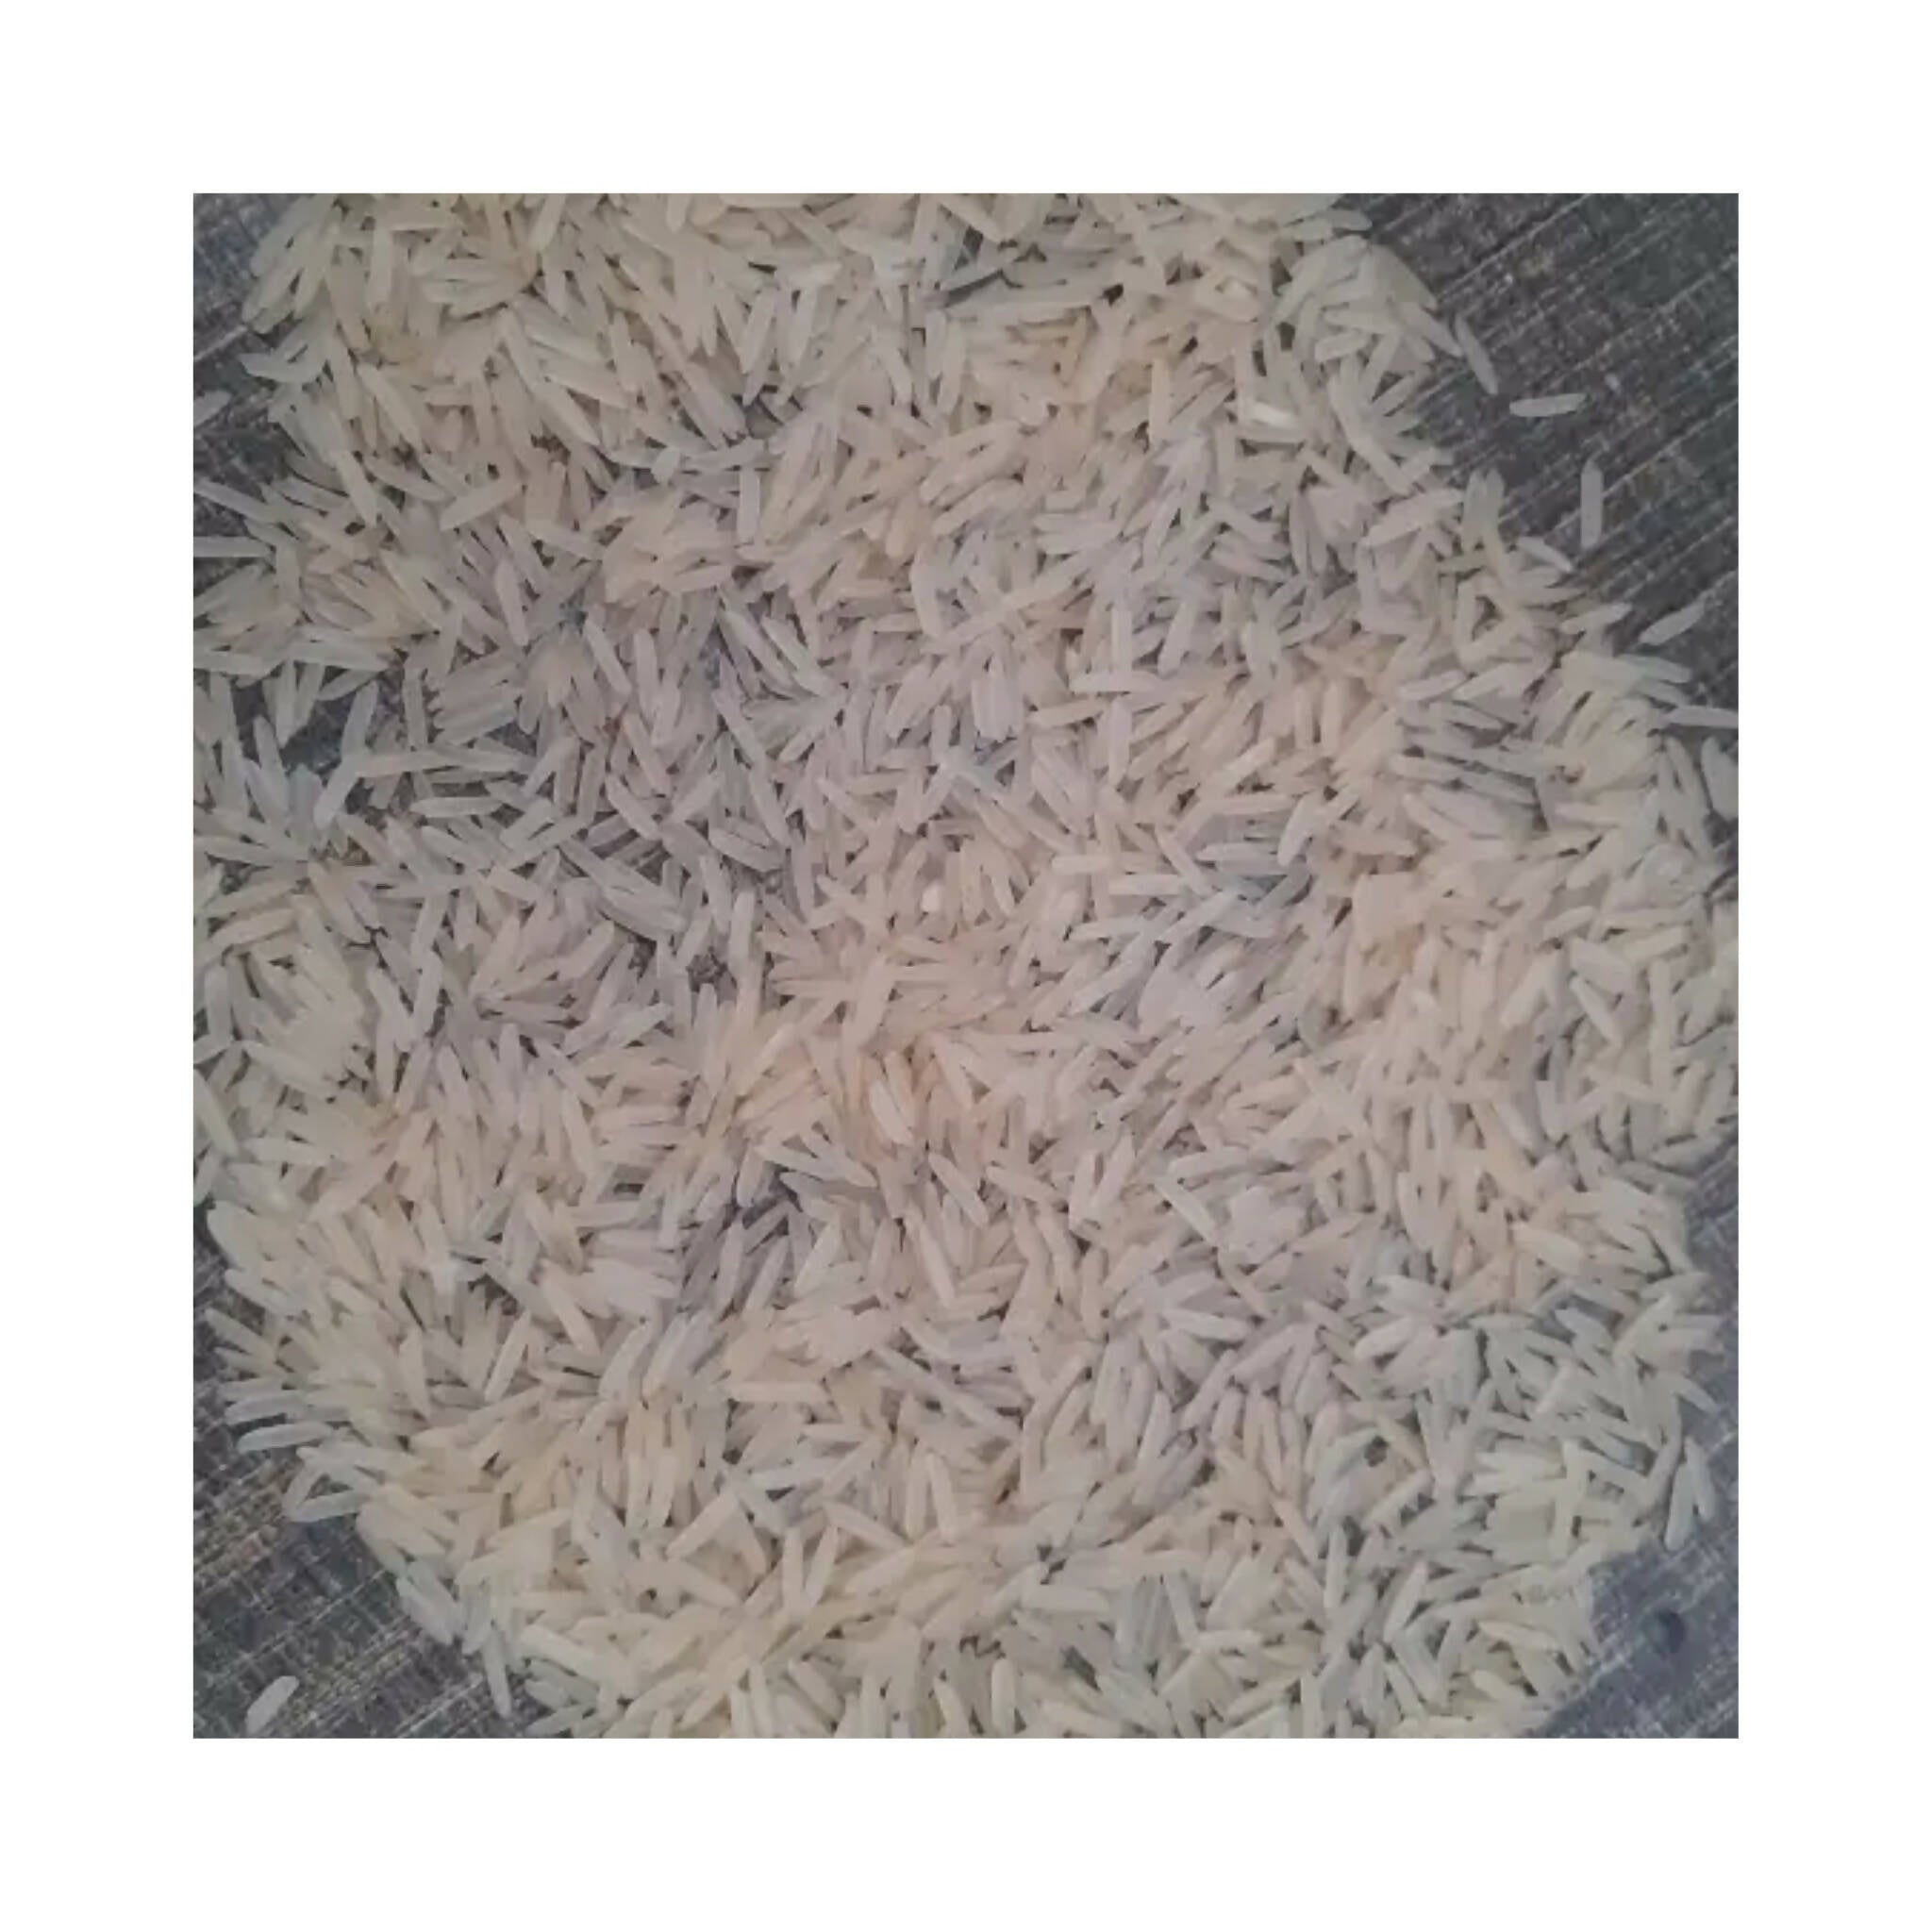 Rice, Kainaat 1121 Double Steam Sella Long Grain, 25kg - Mohabat Brand